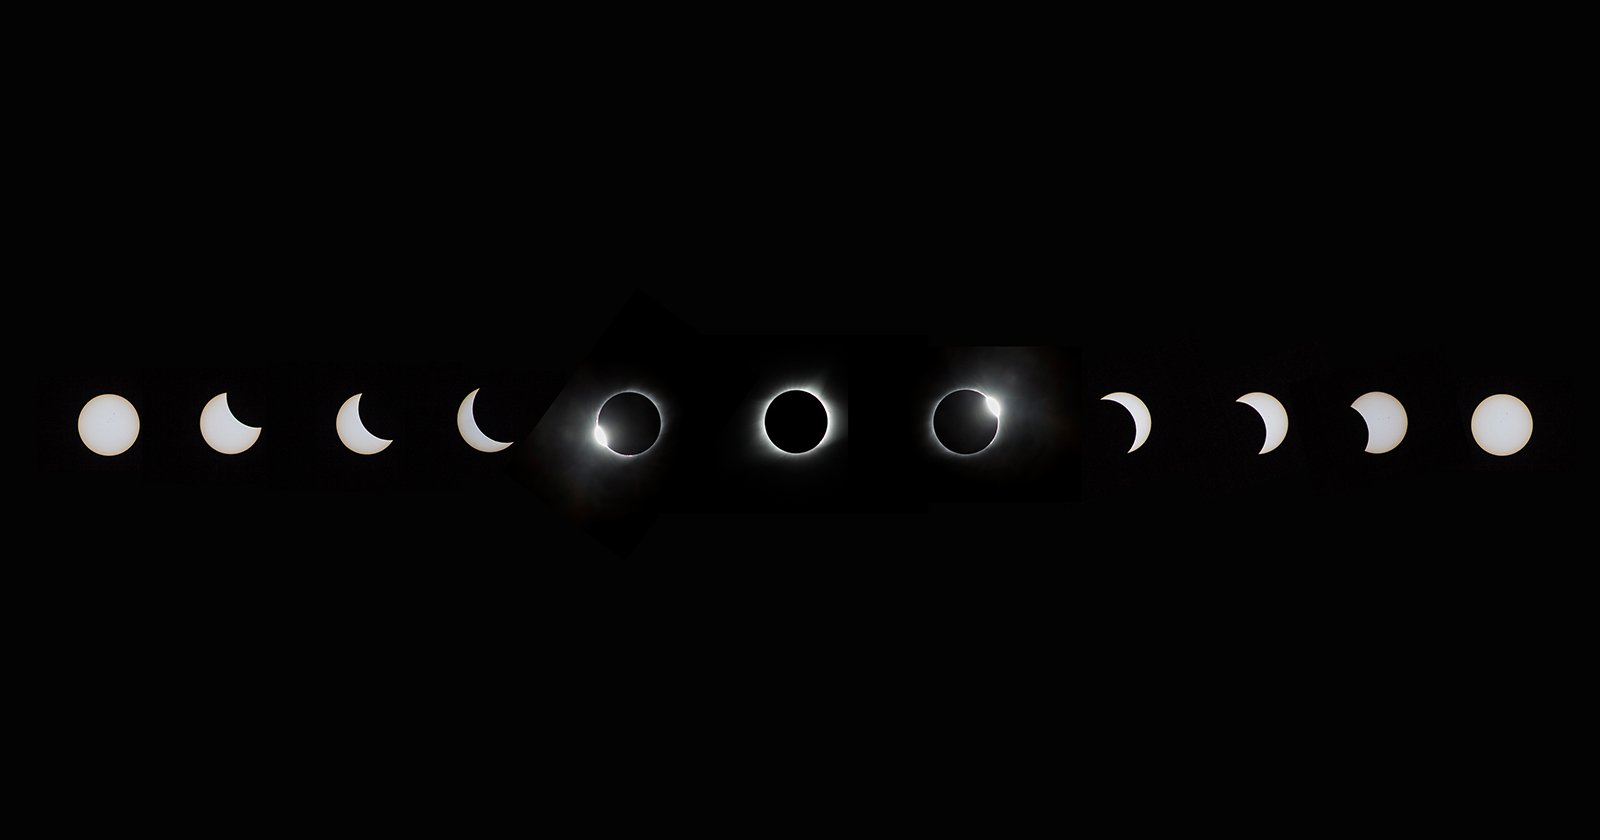  how photograph solar eclipse 